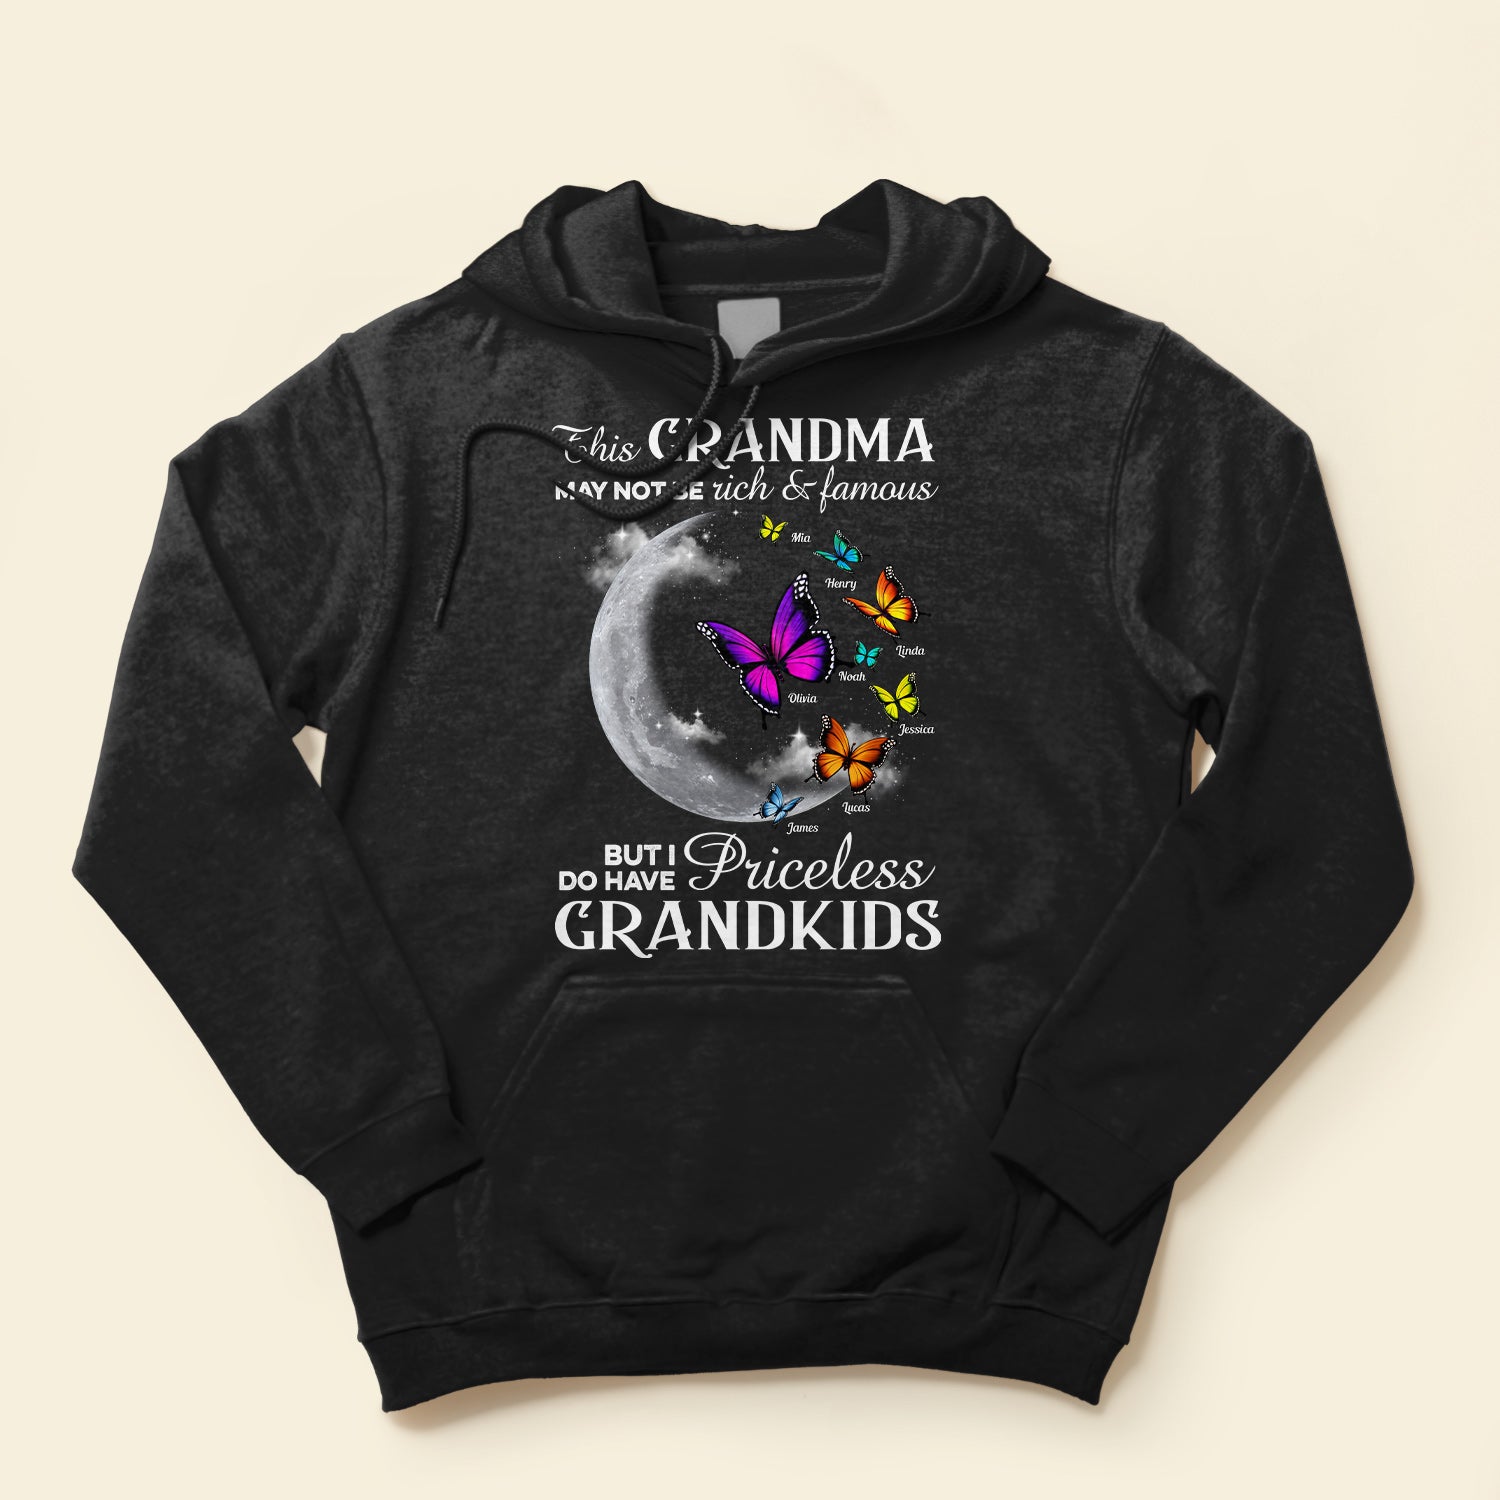 I Do Have Priceless Grandkids - Personalized Shirt - Birthday, Christmas, Grandparents' Day Gift For Grandma, Grammy, Gigi, Nana, Nanny, Mimi, Mom, Mama